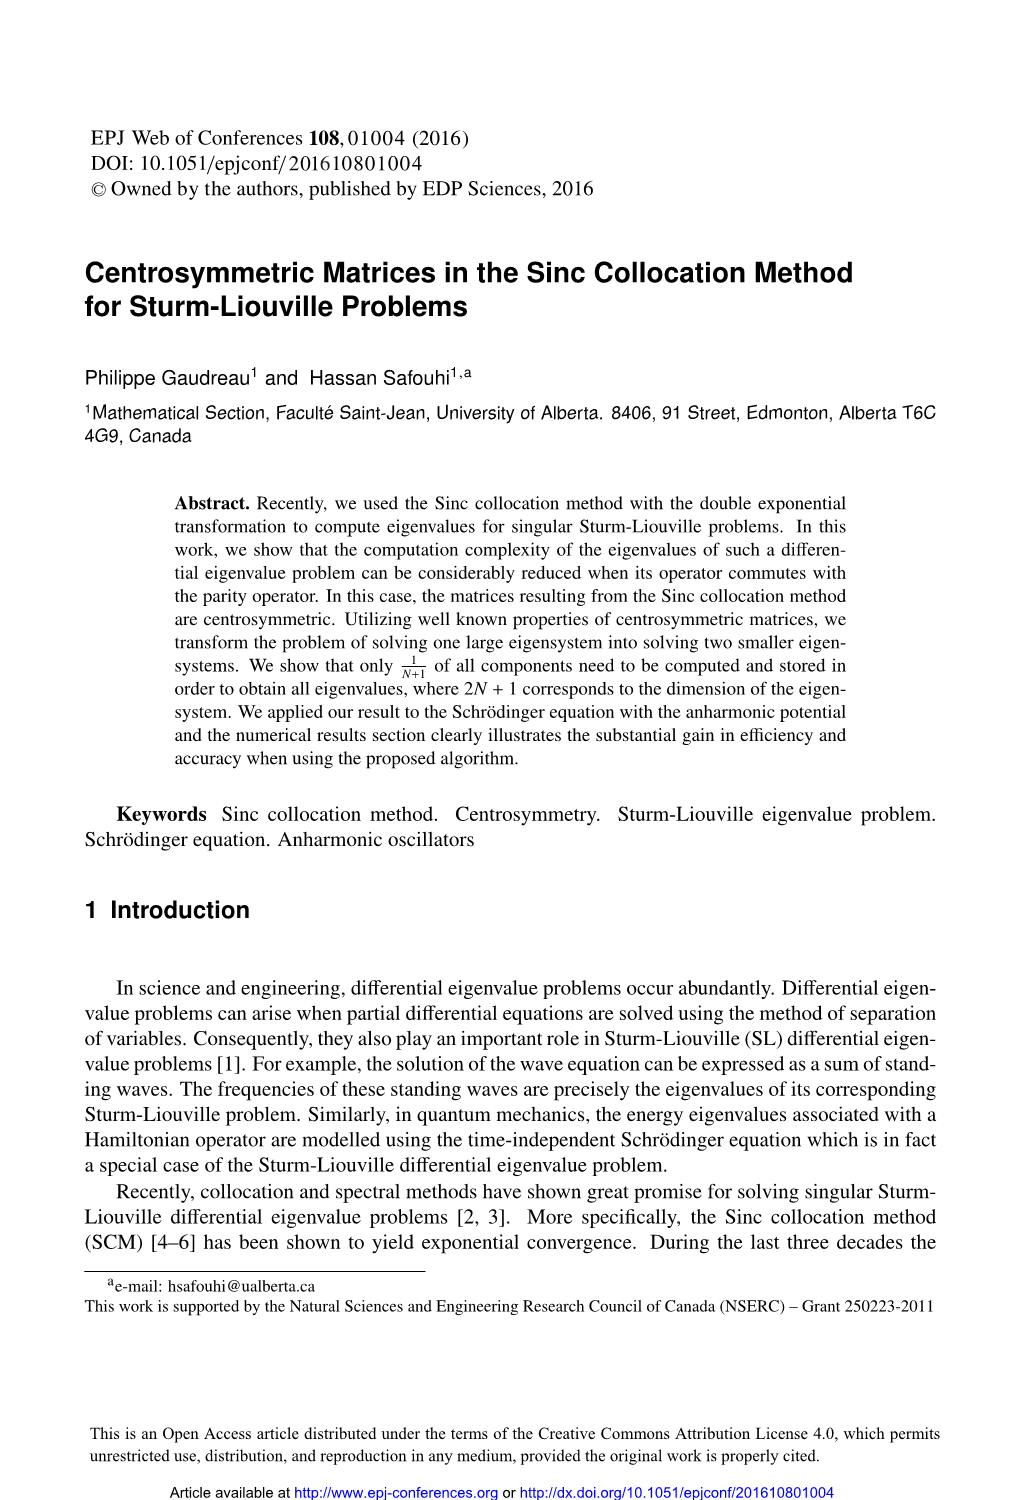 Centrosymmetric Matrices in the Sinc Collocation Method for Sturm-Liouville Problems